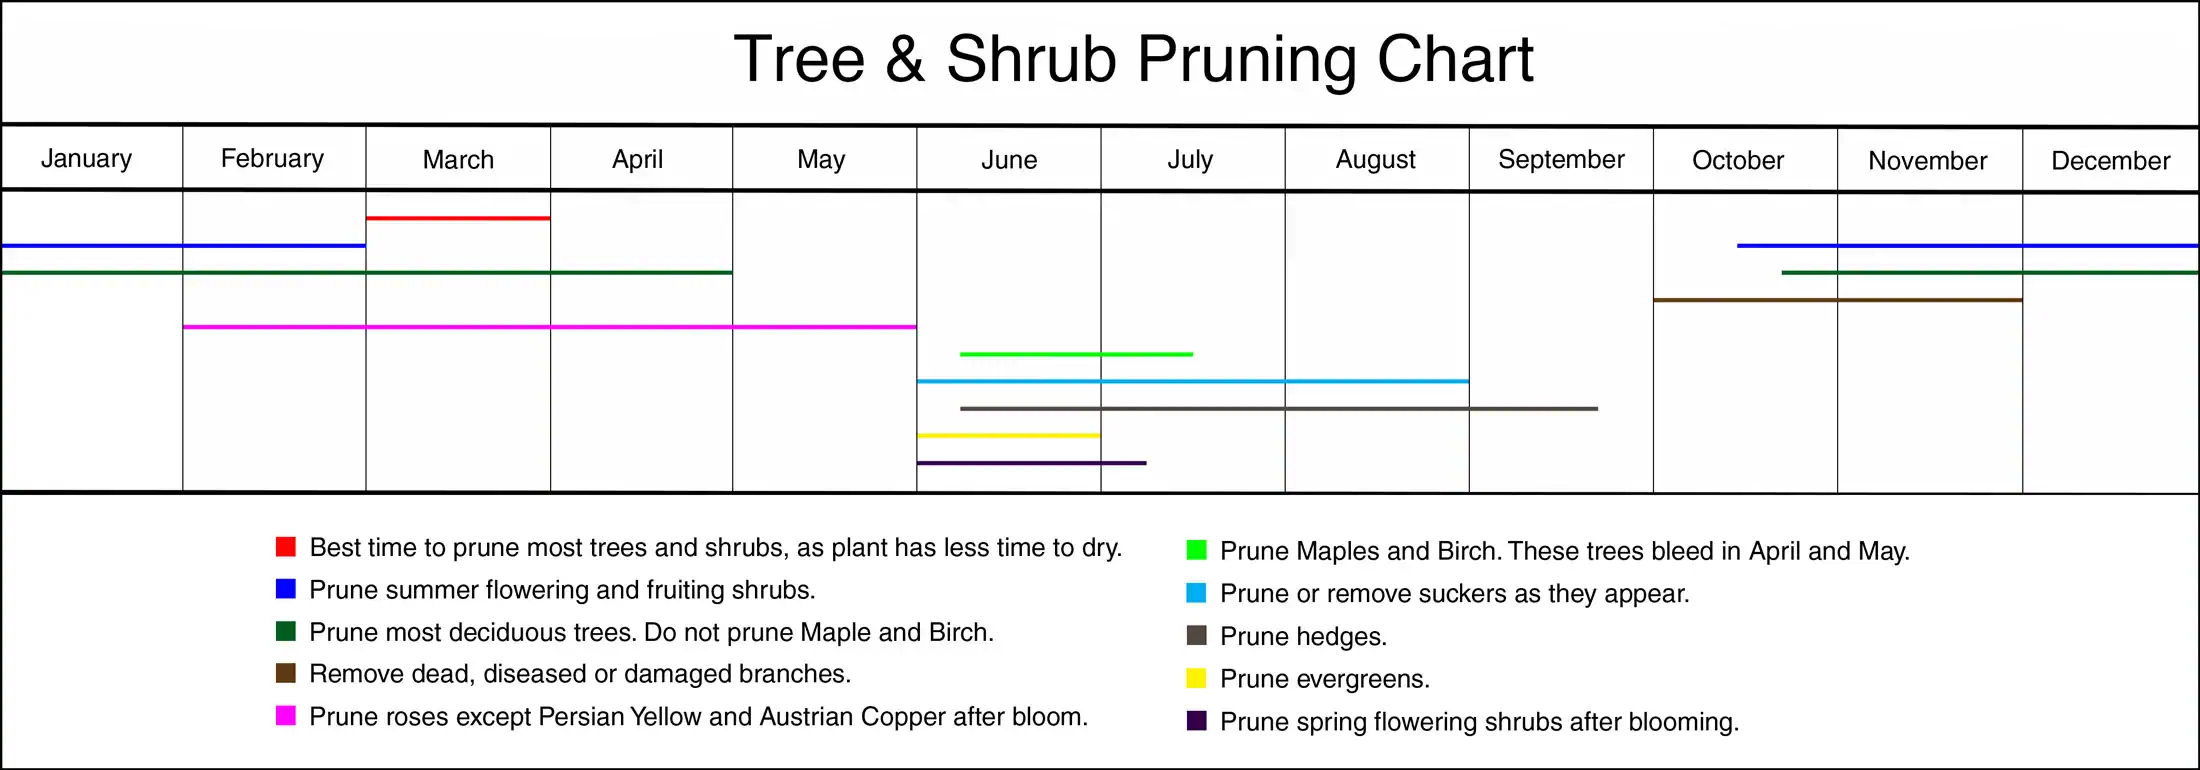 Tree & Shrub Pruning Chart